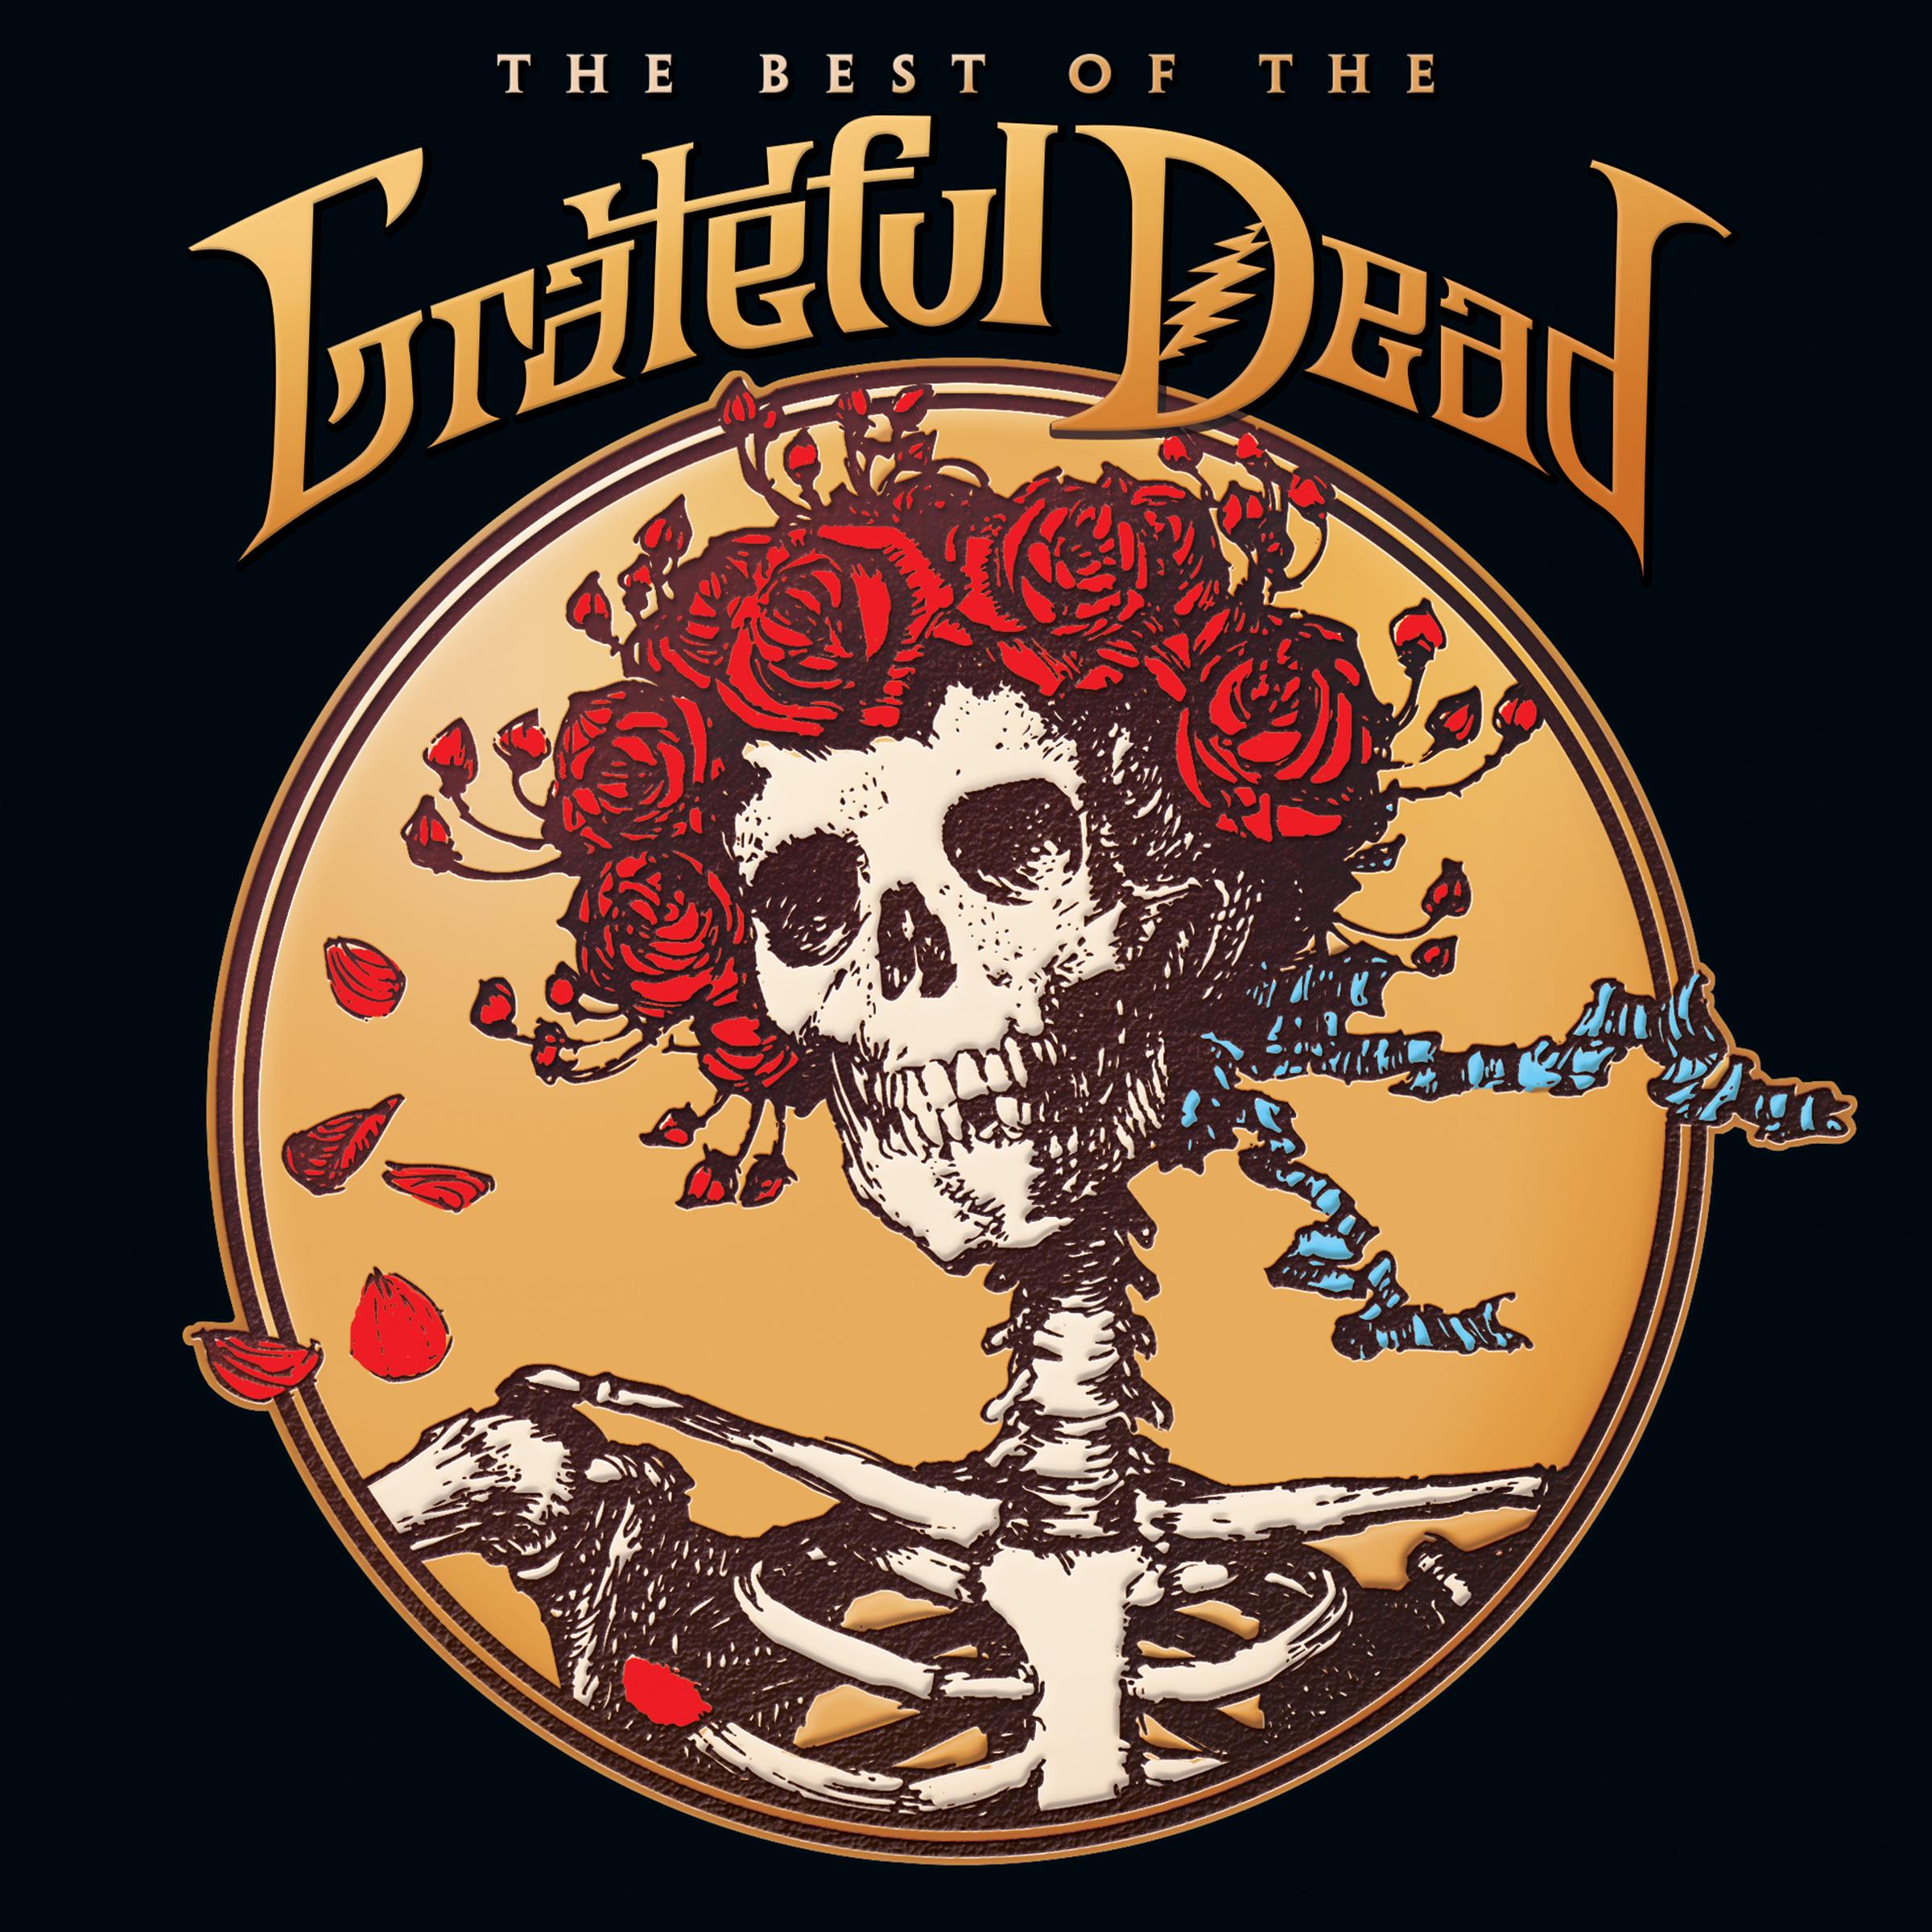 Grateful Dead The Best Of The Grateful Dead 2cds Leeway S Home Grown Music Network